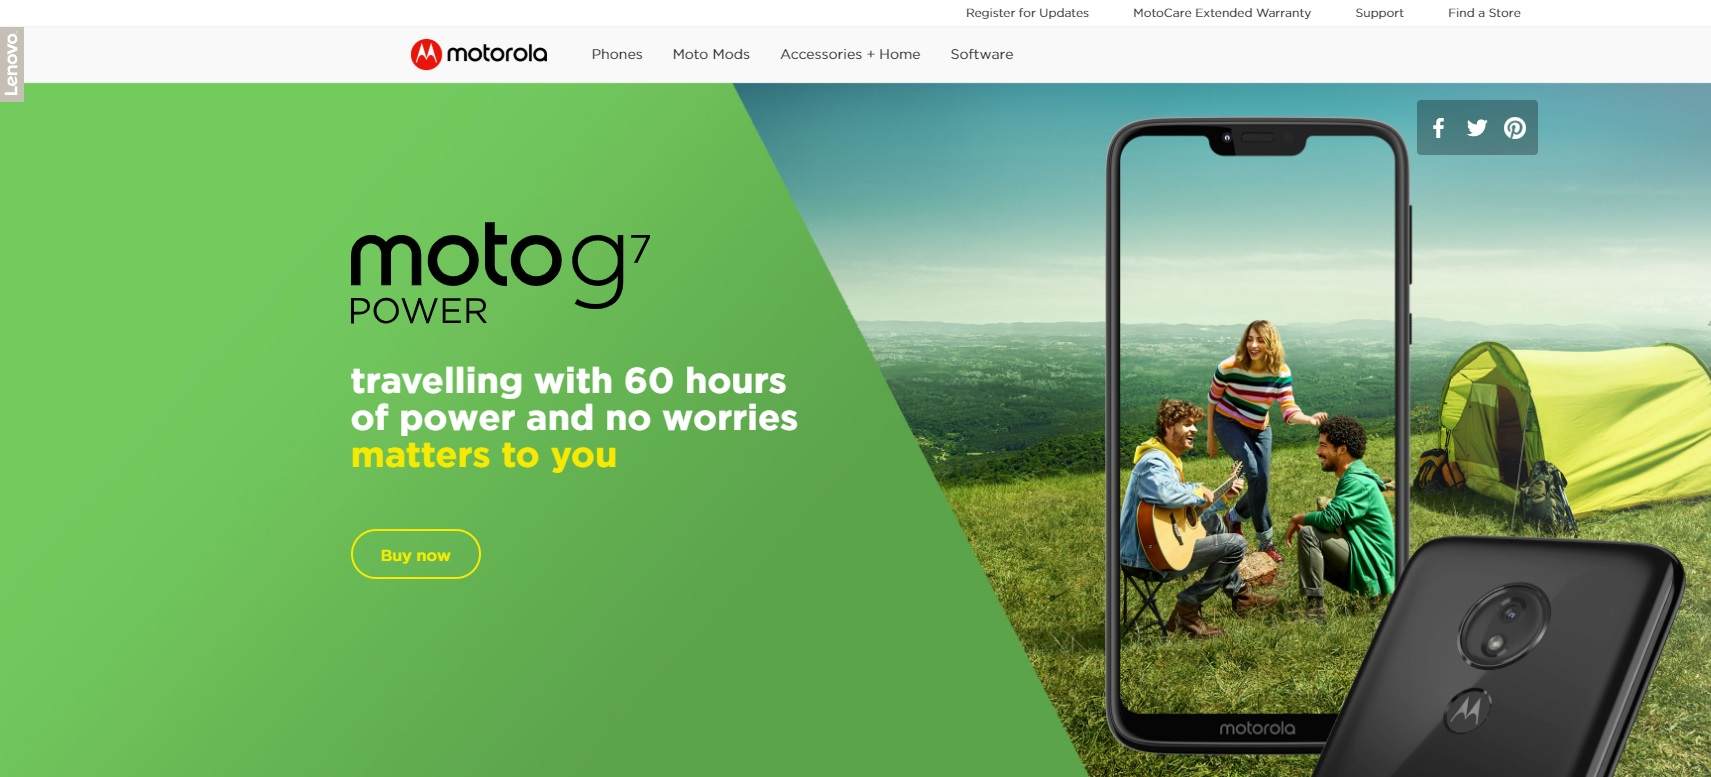 Moto G7 Power listed on official Moto India e-store. Image: Motorola